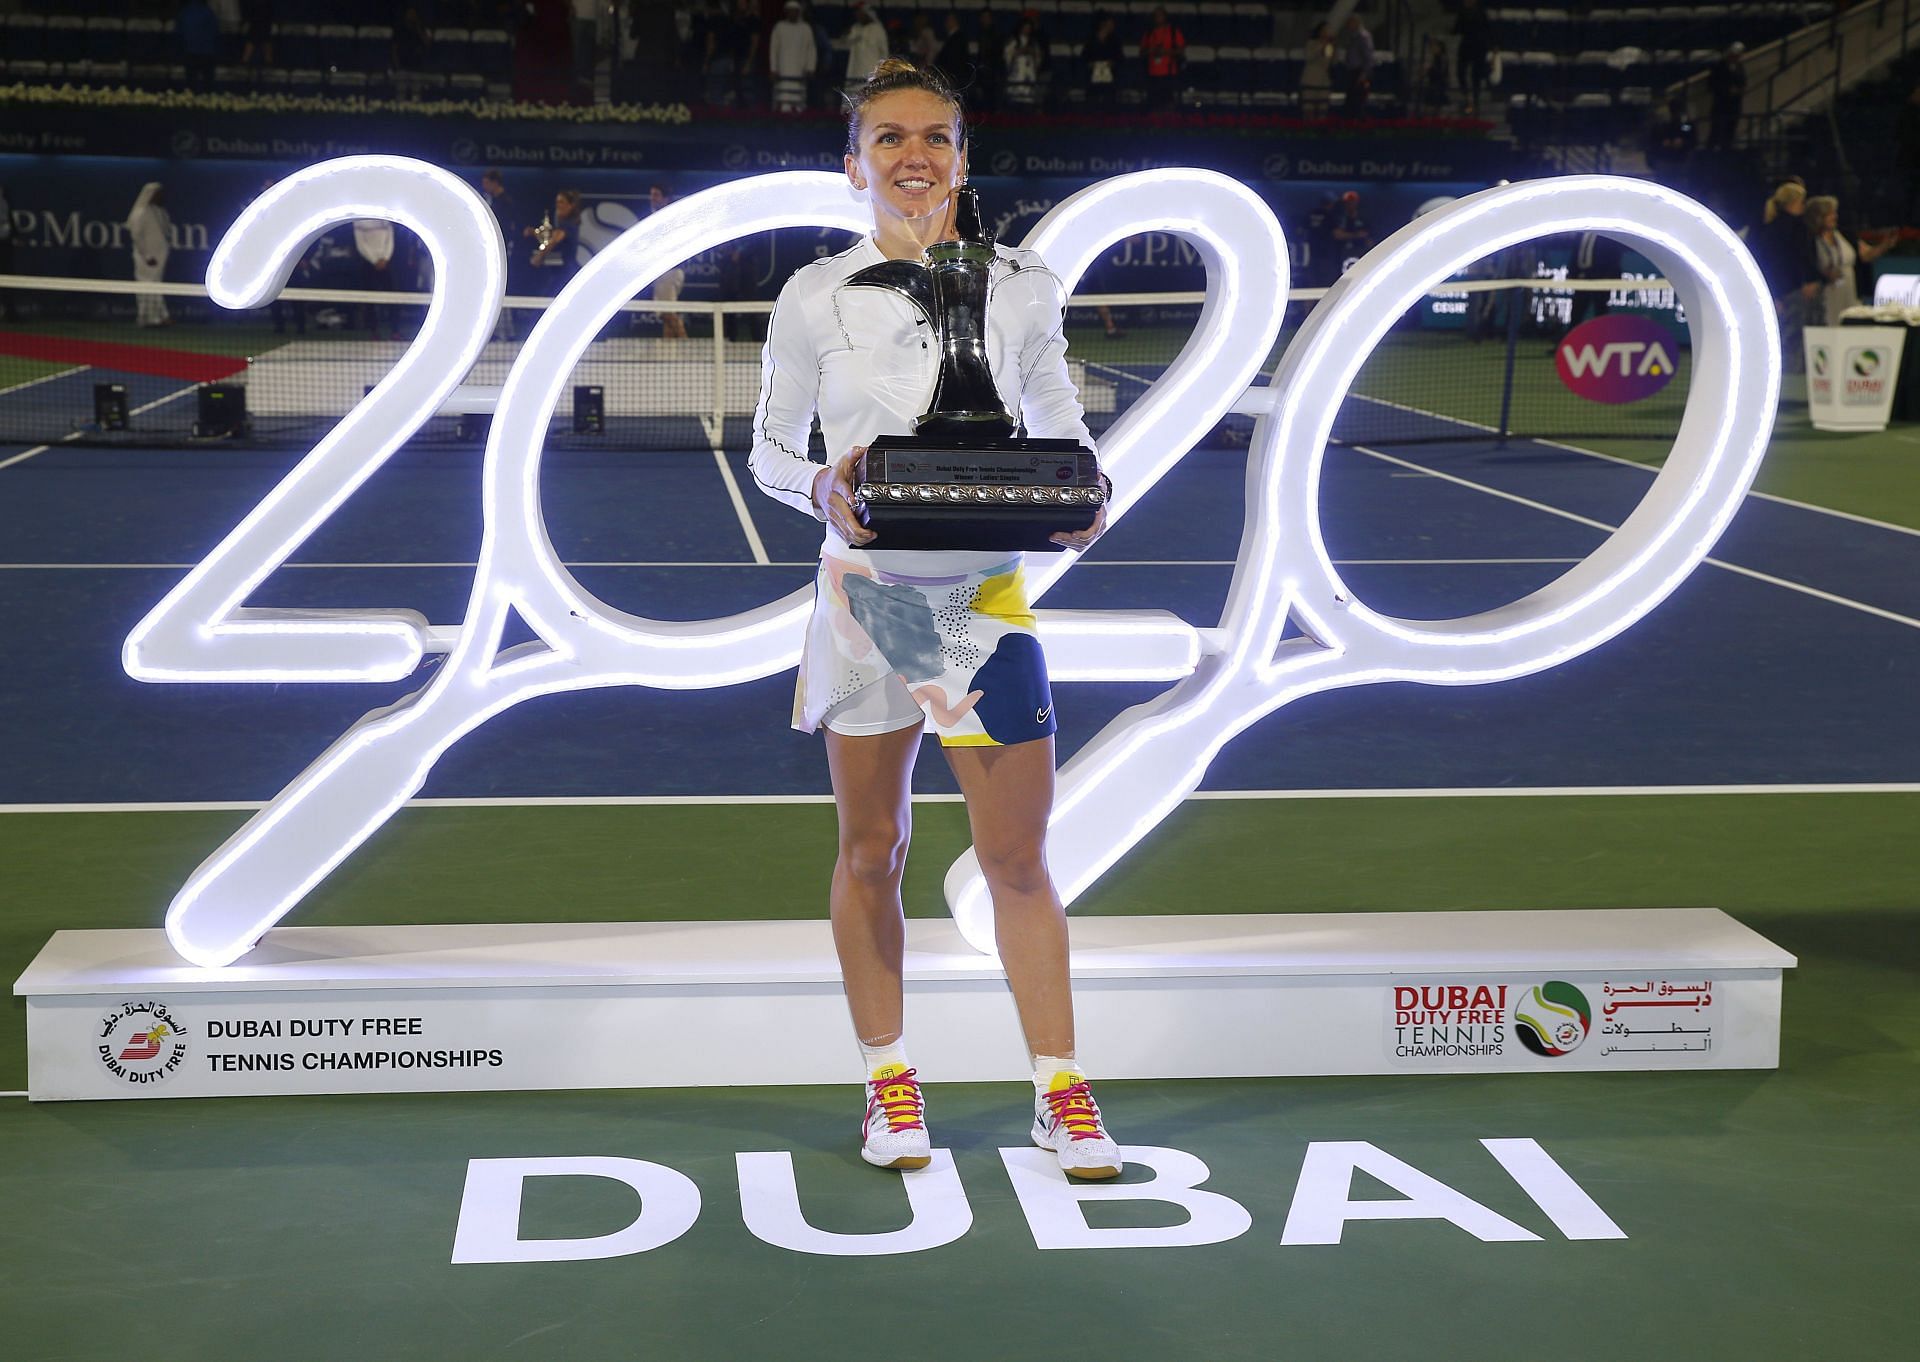 Dubai Tennis Championships 2022 Women's draw, schedule, players, prize